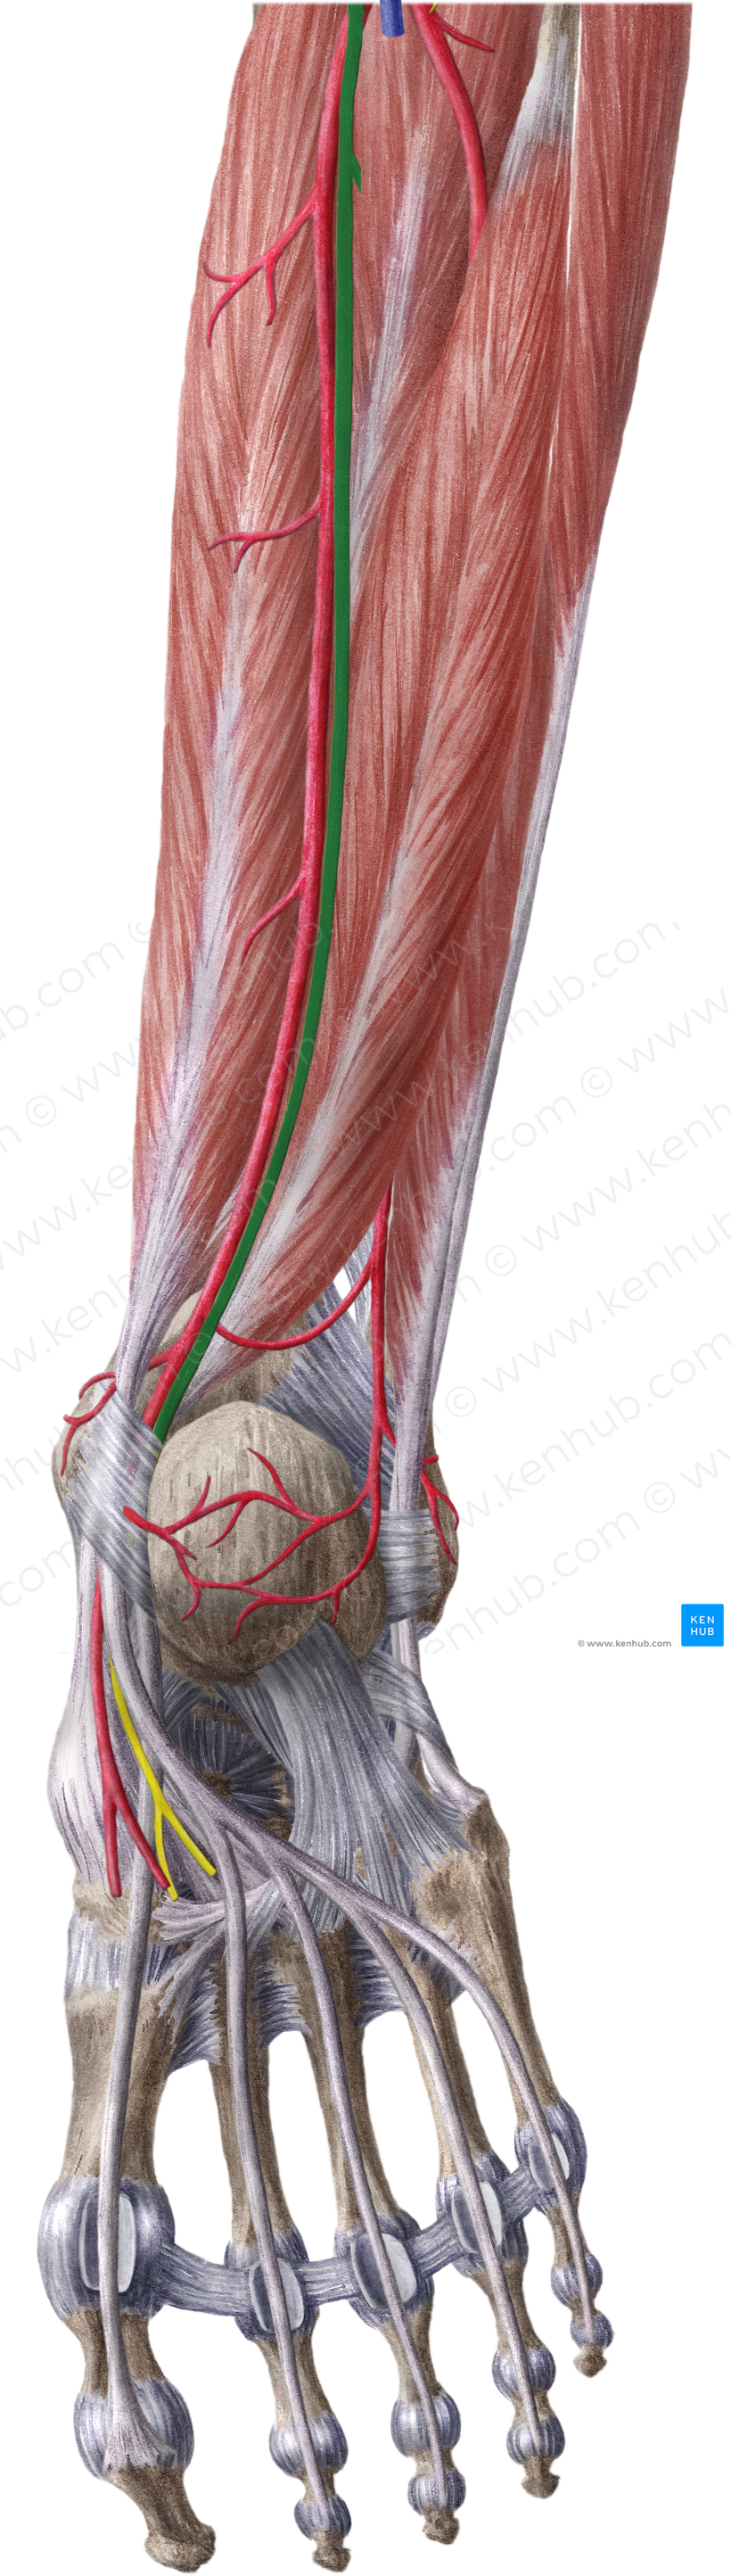 Tibial nerve (#6816)